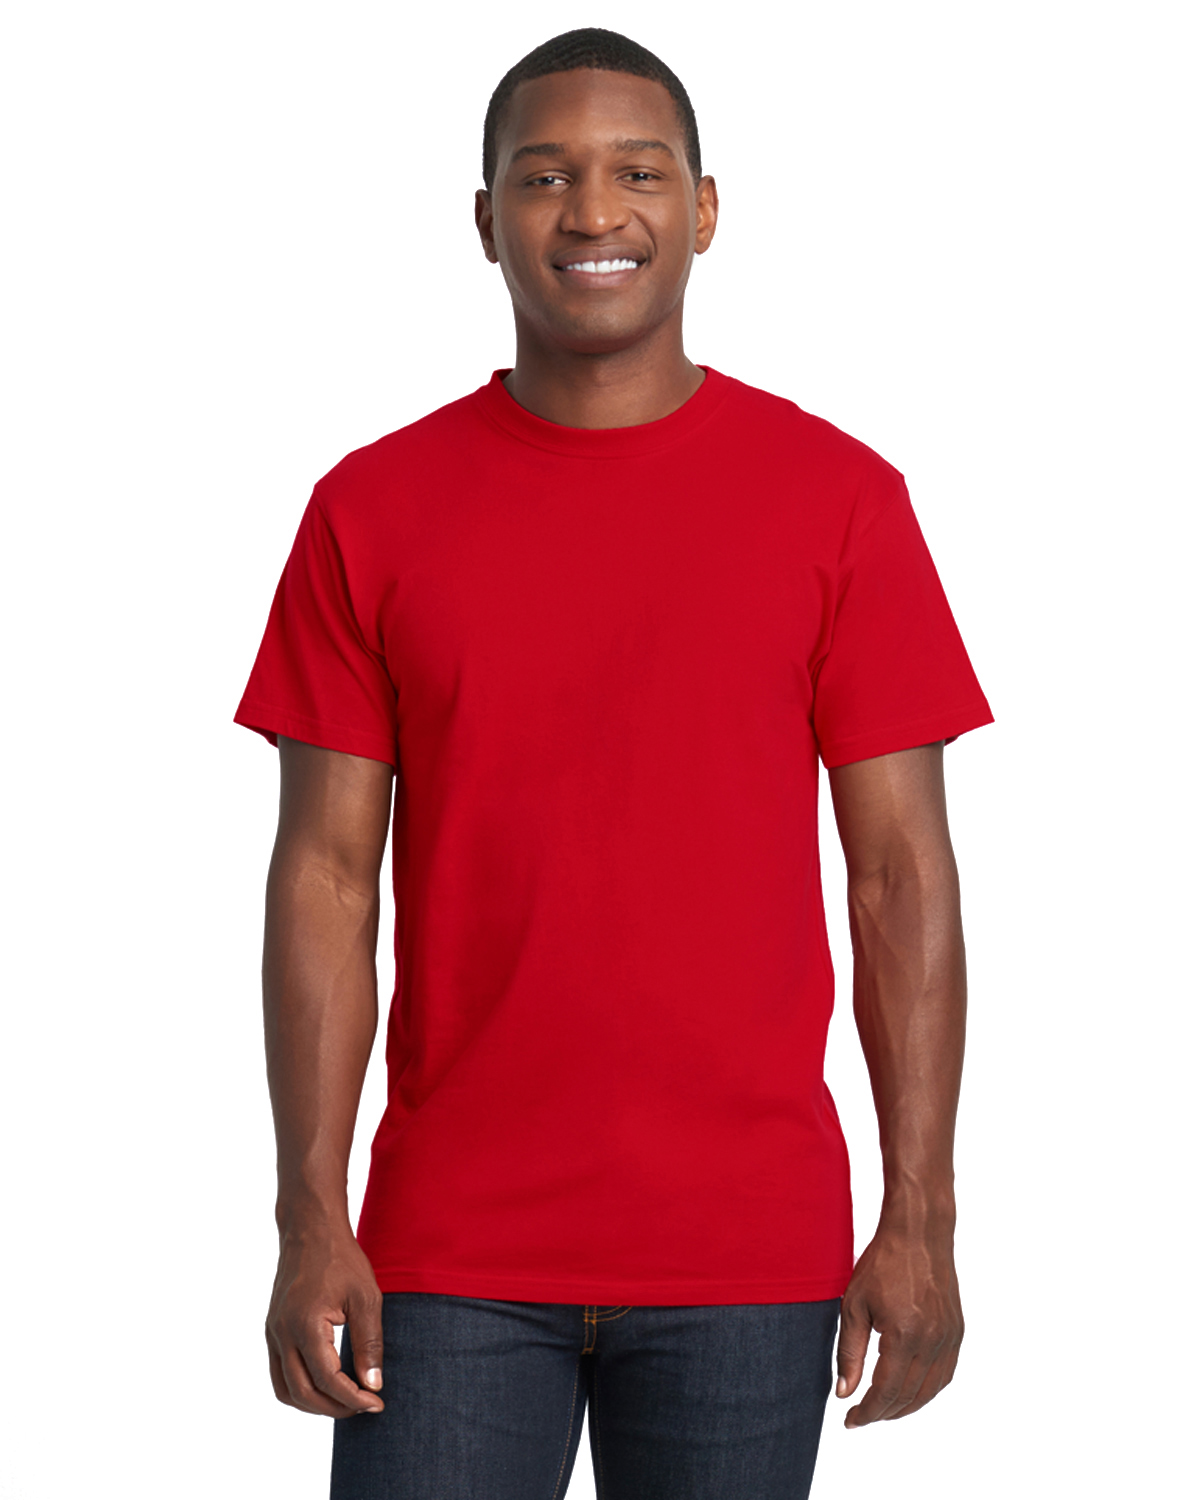 red blank shirt